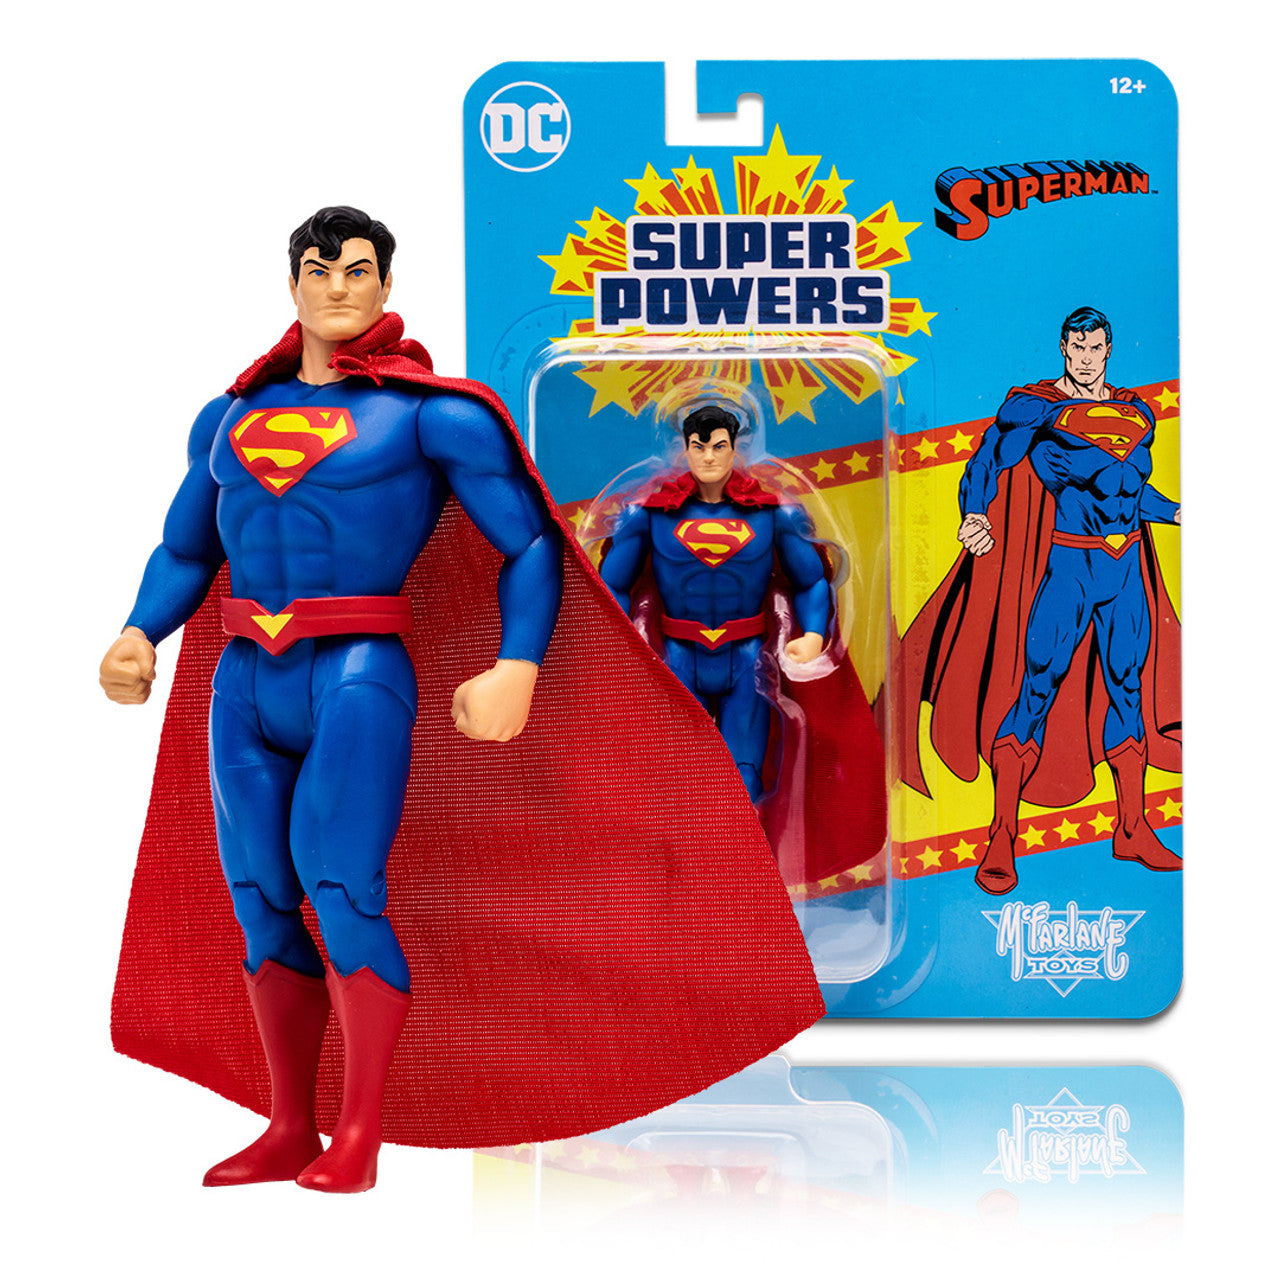 Superman: Reborn (DC Super Powers) 4.5